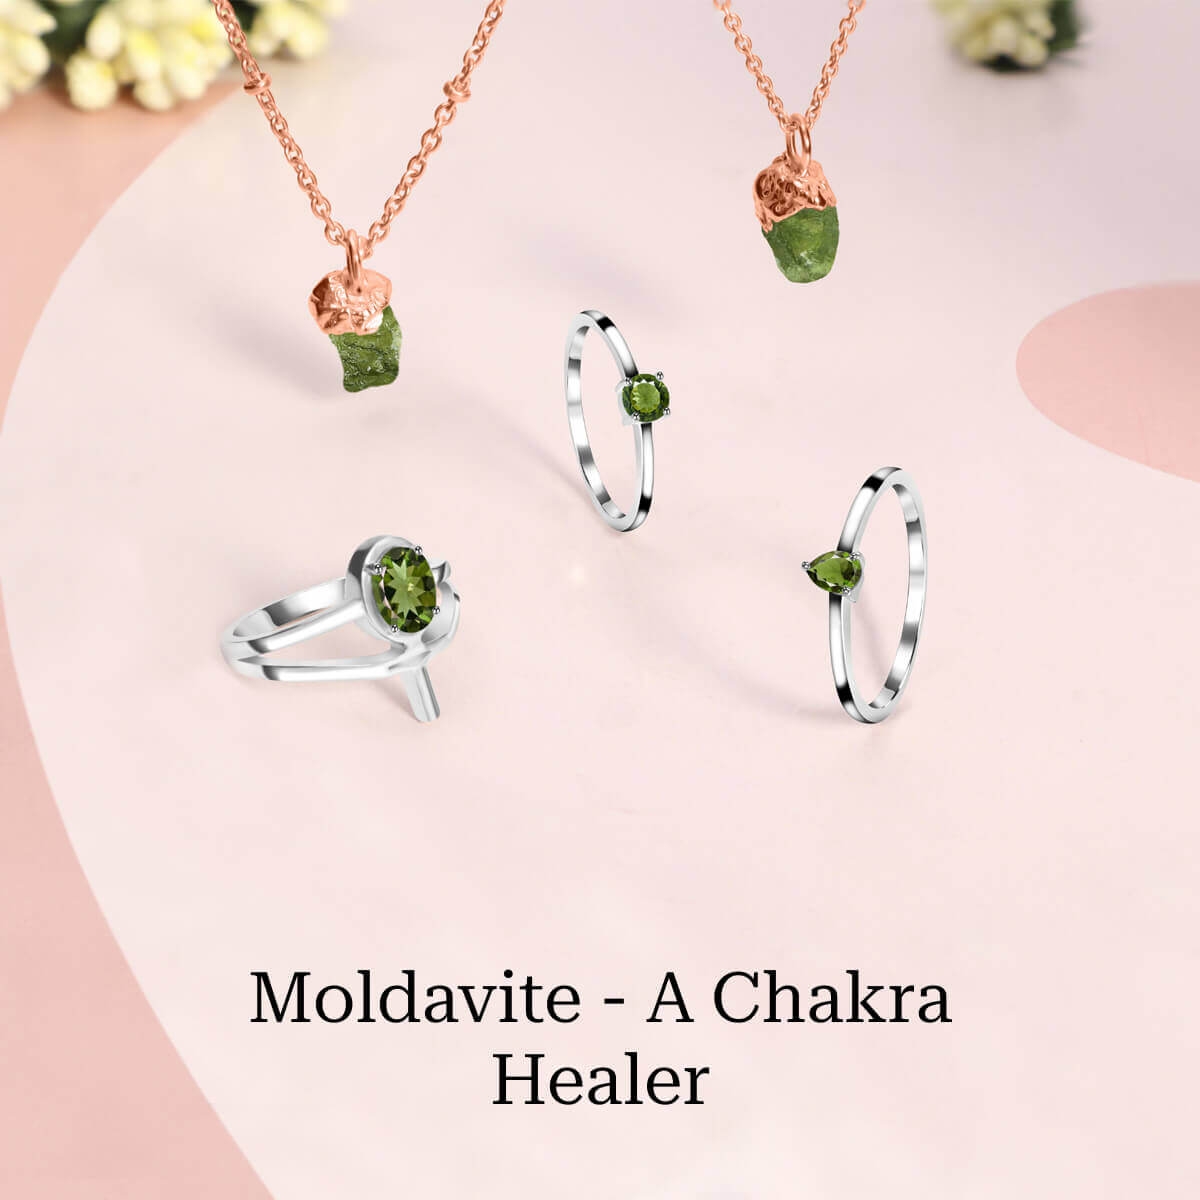 Chakra healing properties of Moldavite